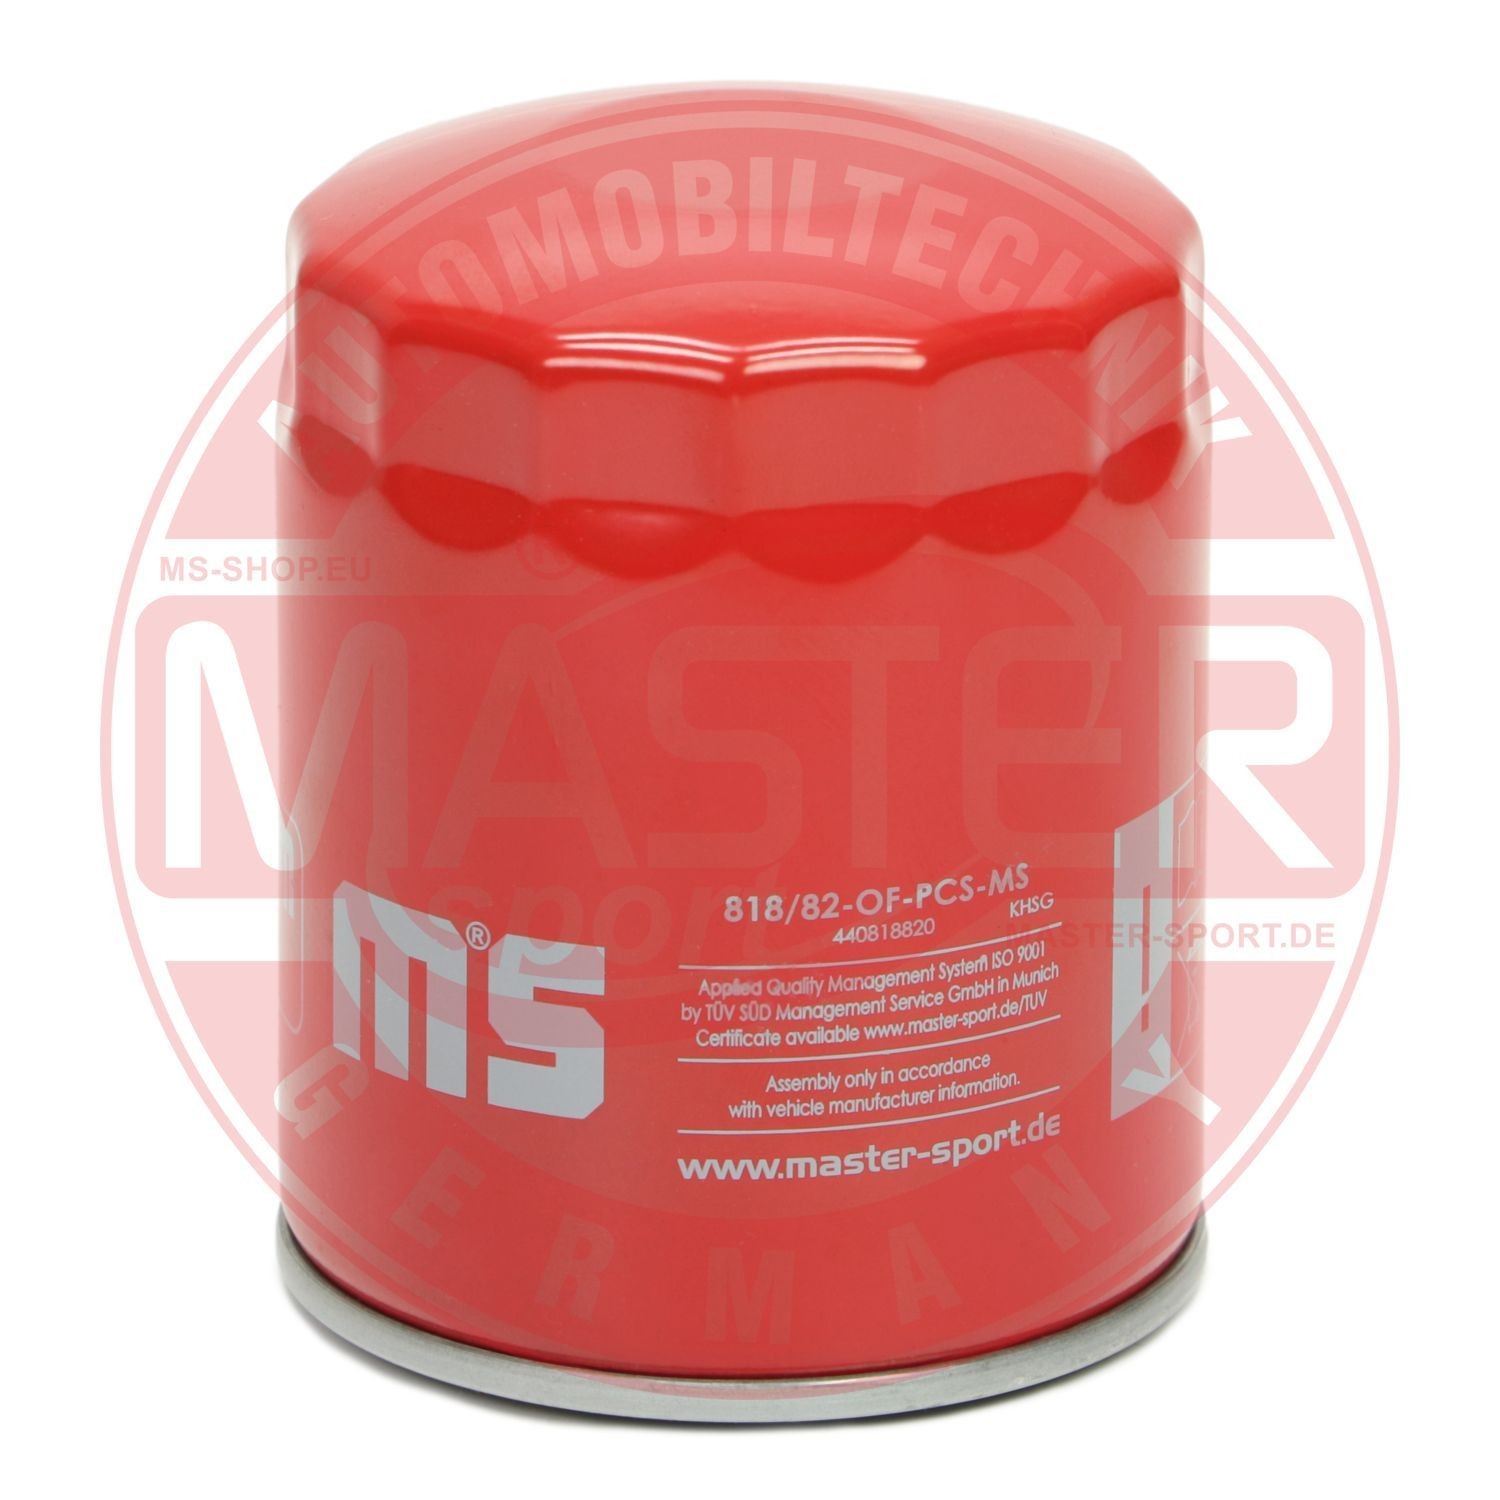 Original MASTER-SPORT 440818820 Oil filters 818/82-OF-PCS-MS for SUBARU IMPREZA